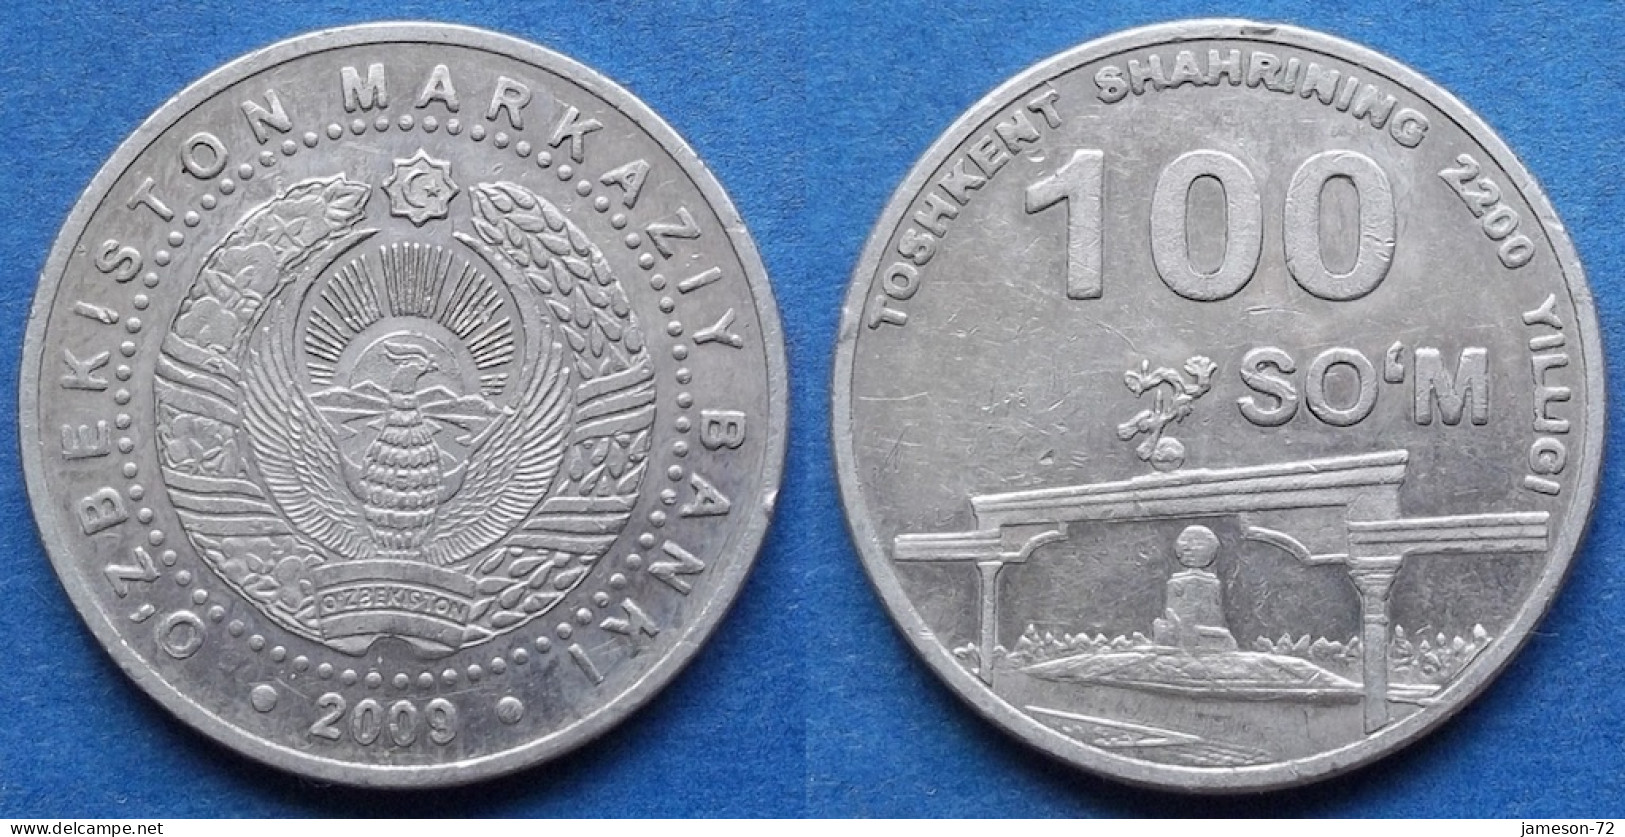 UZBEKISTAN - 100 So'm 2009 "Arch Of Independence" KM# 31 - Edelweiss Coins - Ouzbékistan